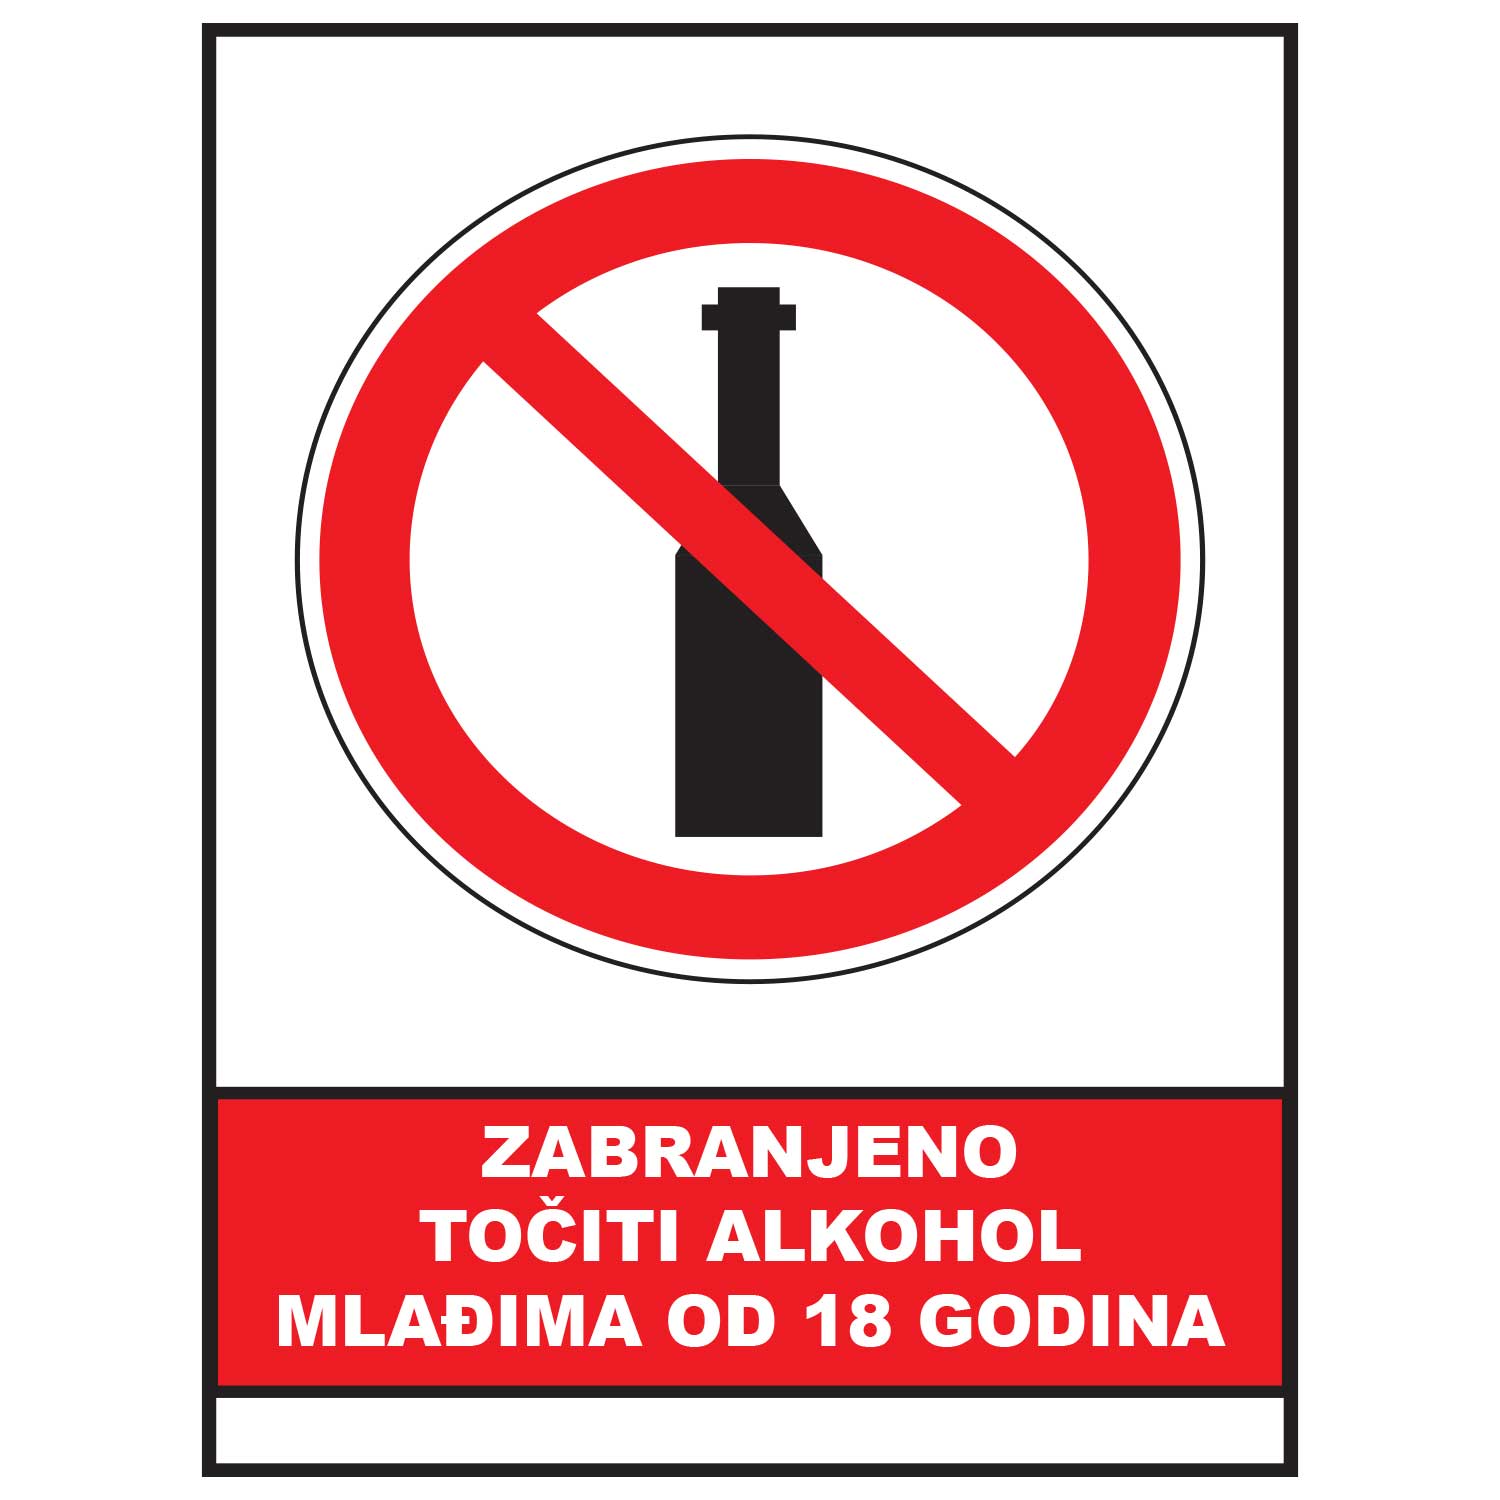 Zabranjeno tociti alkohol mladima od 18 godina, znak zabrane, ZS0060